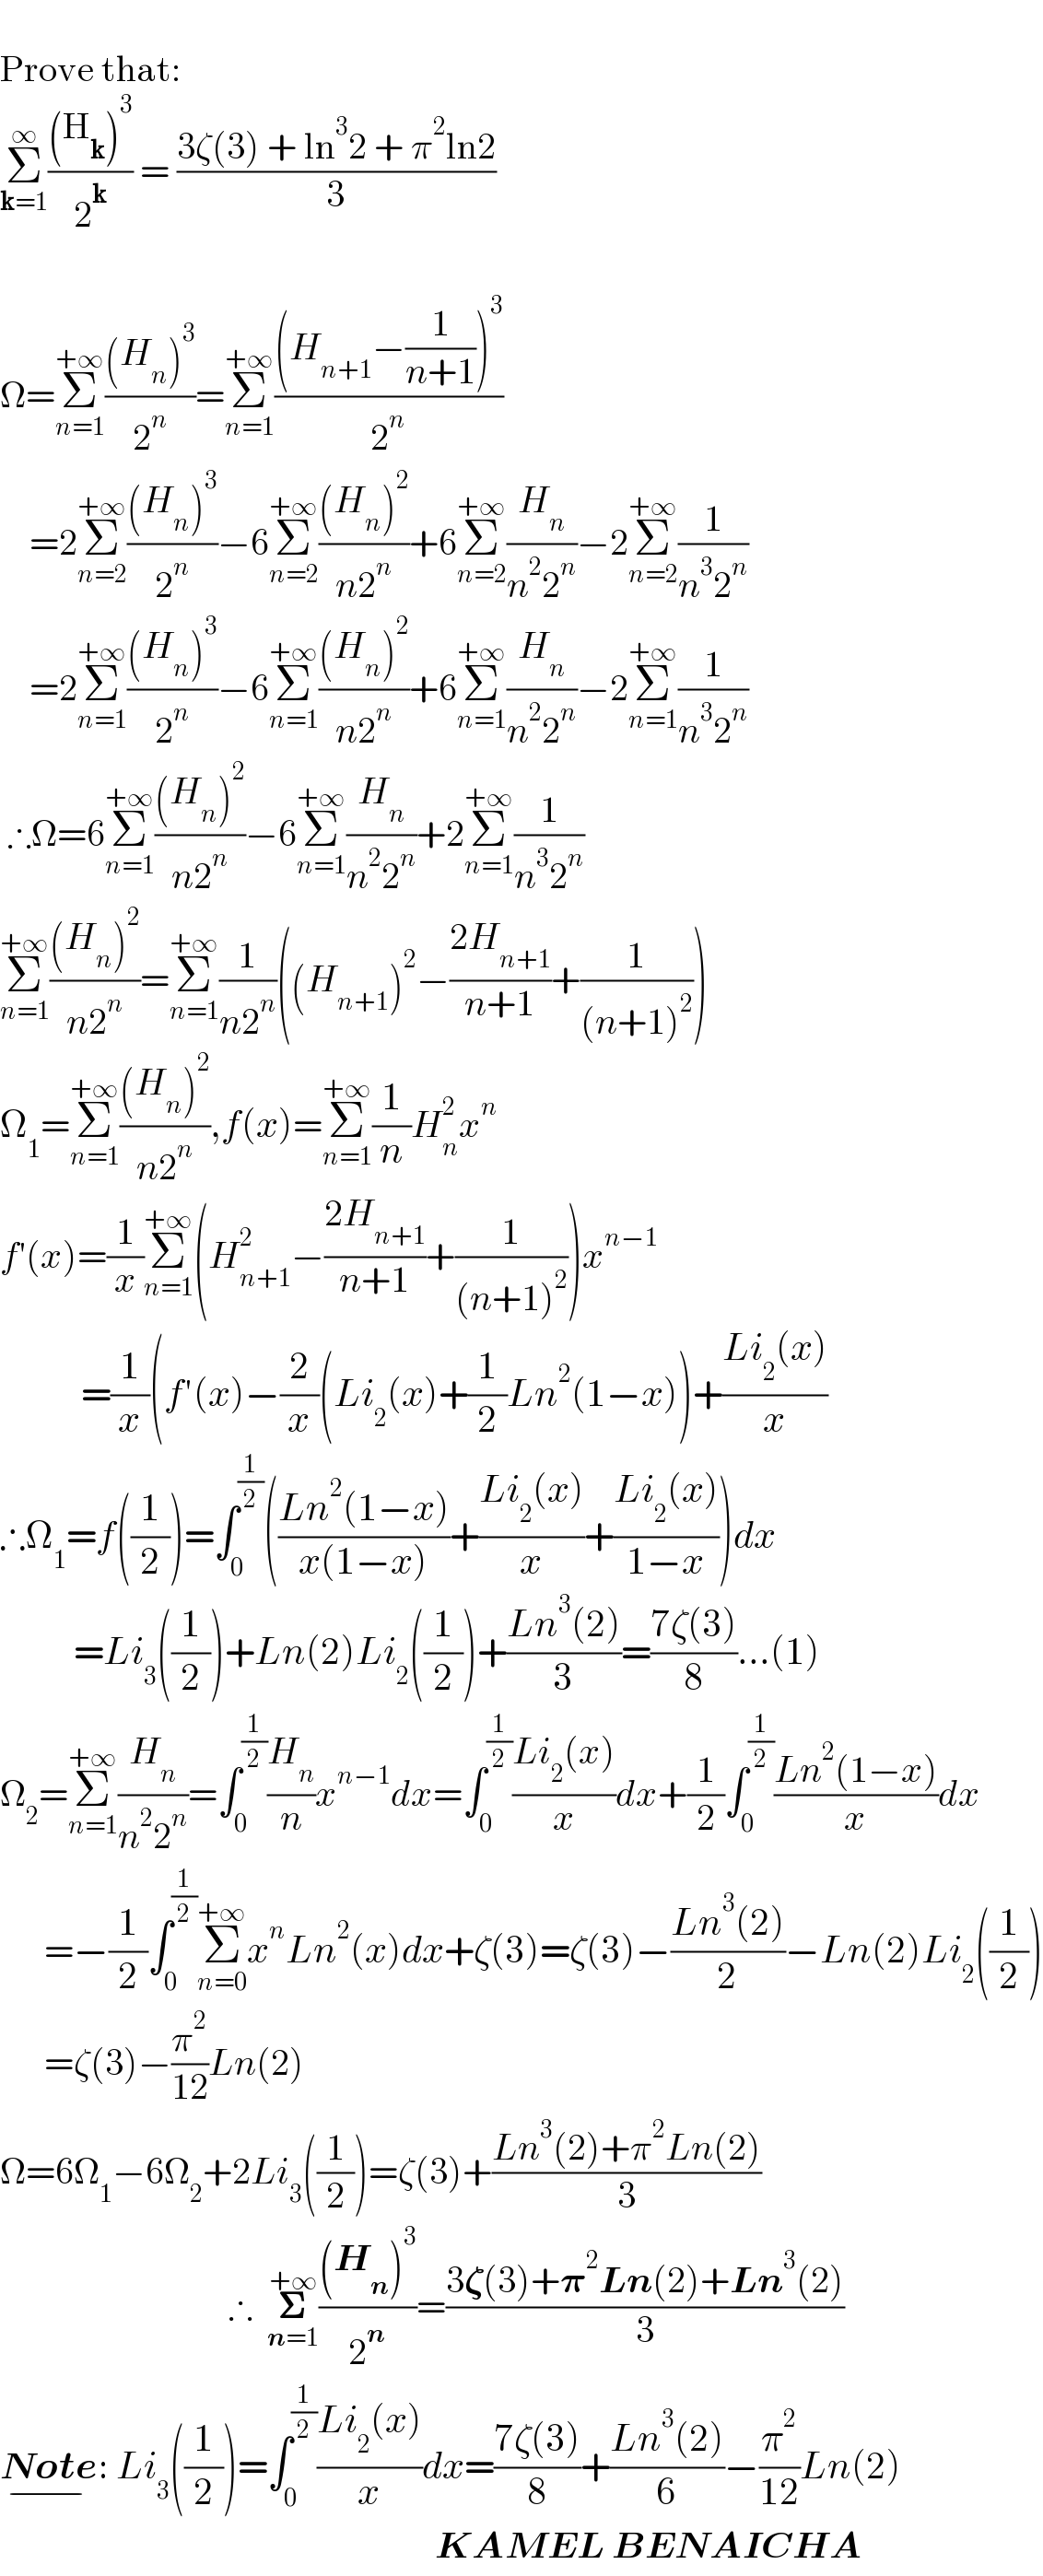   Prove that:  Σ_(k=1) ^∞ (((H_k )^3 )/2^k ) = ((3ζ(3) + ln^3 2 + π^2 ln2)/3)      Ω=Σ_(n=1) ^(+∞) (((H_n )^3 )/2^n )=Σ_(n=1) ^(+∞) (((H_(n+1) −(1/(n+1)))^3 )/2^n )      =2Σ_(n=2) ^(+∞) (((H_n )^3 )/2^n )−6Σ_(n=2) ^(+∞) (((H_n )^2 )/(n2^n ))+6Σ_(n=2) ^(+∞) (H_n /(n^2 2^n ))−2Σ_(n=2) ^(+∞) (1/(n^3 2^n ))      =2Σ_(n=1) ^(+∞) (((H_n )^3 )/2^n )−6Σ_(n=1) ^(+∞) (((H_n )^2 )/(n2^n ))+6Σ_(n=1) ^(+∞) (H_n /(n^2 2^n ))−2Σ_(n=1) ^(+∞) (1/(n^3 2^n ))   ∴Ω=6Σ_(n=1) ^(+∞) (((H_n )^2 )/(n2^n ))−6Σ_(n=1) ^(+∞) (H_n /(n^2 2^n ))+2Σ_(n=1) ^(+∞) (1/(n^3 2^n ))  Σ_(n=1) ^(+∞) (((H_n )^2 )/(n2^n ))=Σ_(n=1) ^(+∞) (1/(n2^n ))((H_(n+1) )^2 −((2H_(n+1) )/(n+1))+(1/((n+1)^2 )))  Ω_1 =Σ_(n=1) ^(+∞) (((H_n )^2 )/(n2^n )),f(x)=Σ_(n=1) ^(+∞) (1/n)H_n ^2 x^n   f′(x)=(1/x)Σ_(n=1) ^(+∞) (H_(n+1) ^2 −((2H_(n+1) )/(n+1))+(1/((n+1)^2 )))x^(n−1)              =(1/x)(f′(x)−(2/x)(Li_2 (x)+(1/2)Ln^2 (1−x))+((Li_2 (x))/x)  ∴Ω_1 =f((1/2))=∫_0 ^(1/2) (((Ln^2 (1−x))/(x(1−x)))+((Li_2 (x))/x)+((Li_2 (x))/(1−x)))dx            =Li_3 ((1/2))+Ln(2)Li_2 ((1/2))+((Ln^3 (2))/3)=((7ζ(3))/8)...(1)  Ω_2 =Σ_(n=1) ^(+∞) (H_n /(n^2 2^n ))=∫_0 ^(1/2) (H_n /n)x^(n−1) dx=∫_0 ^(1/2) ((Li_2 (x))/x)dx+(1/2)∫_0 ^(1/2) ((Ln^2 (1−x))/x)dx        =−(1/2)∫_0 ^(1/2) Σ_(n=0) ^(+∞) x^n Ln^2 (x)dx+ζ(3)=ζ(3)−((Ln^3 (2))/2)−Ln(2)Li_2 ((1/2))        =ζ(3)−(π^2 /(12))Ln(2)  Ω=6Ω_1 −6Ω_2 +2Li_3 ((1/2))=ζ(3)+((Ln^3 (2)+π^2 Ln(2))/3)                                 ∴  𝚺_(n=1) ^(+∞) (((H_n )^3 )/2^n )=((3𝛇(3)+𝛑^2 Ln(2)+Ln^3 (2))/3)  Note_(−) : Li_3 ((1/2))=∫_0 ^(1/2) ((Li_2 (x))/x)dx=((7ζ(3))/8)+((Ln^3 (2))/6)−(π^2 /(12))Ln(2)                                                             KAMEL BENAICHA  